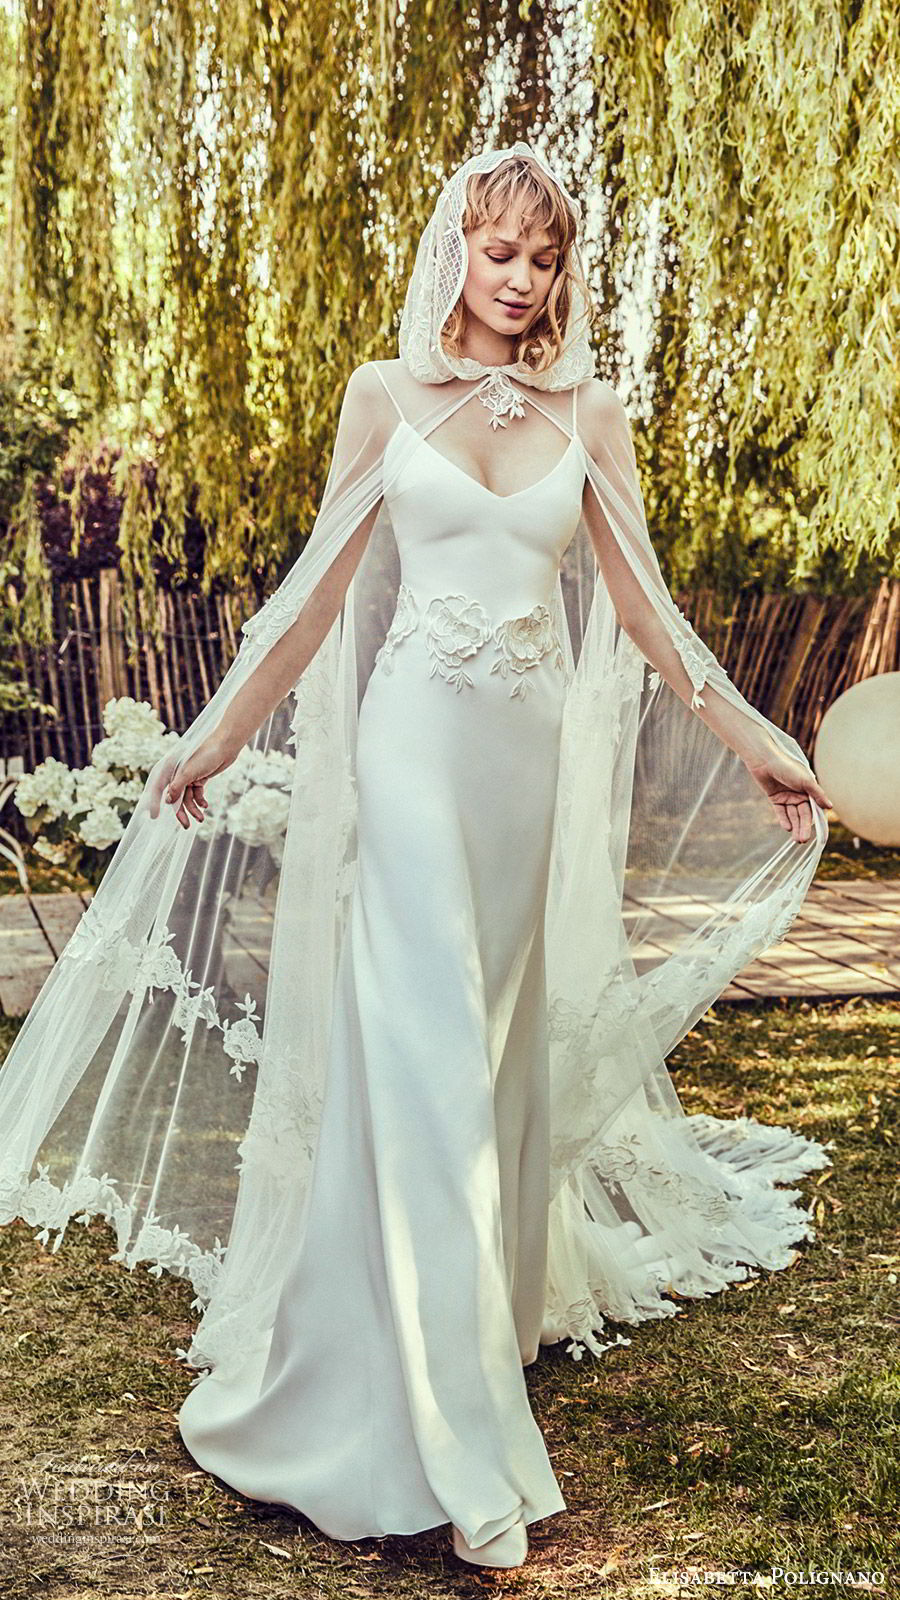 elisabetta polignano 2019 bridal sleeveless thin straps scoop neckline embellished waist sheath wedding dress (4) sheer cape hood cloak boho chic mv